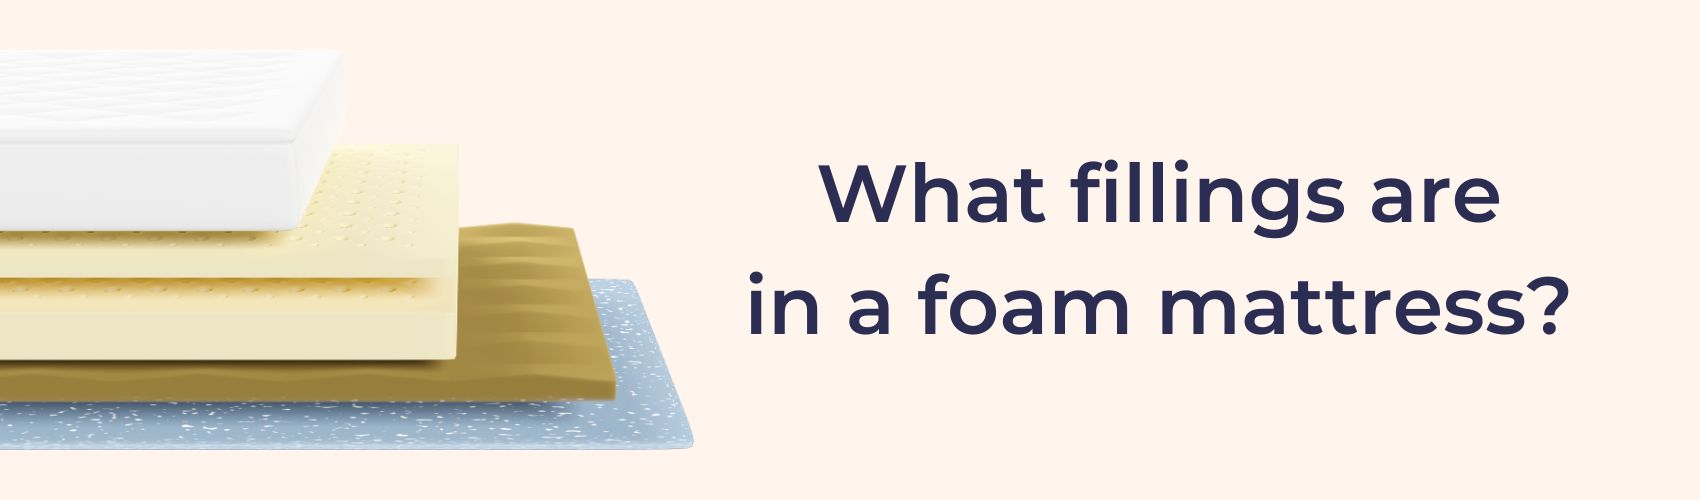 Image of various types of foam mattress fillings